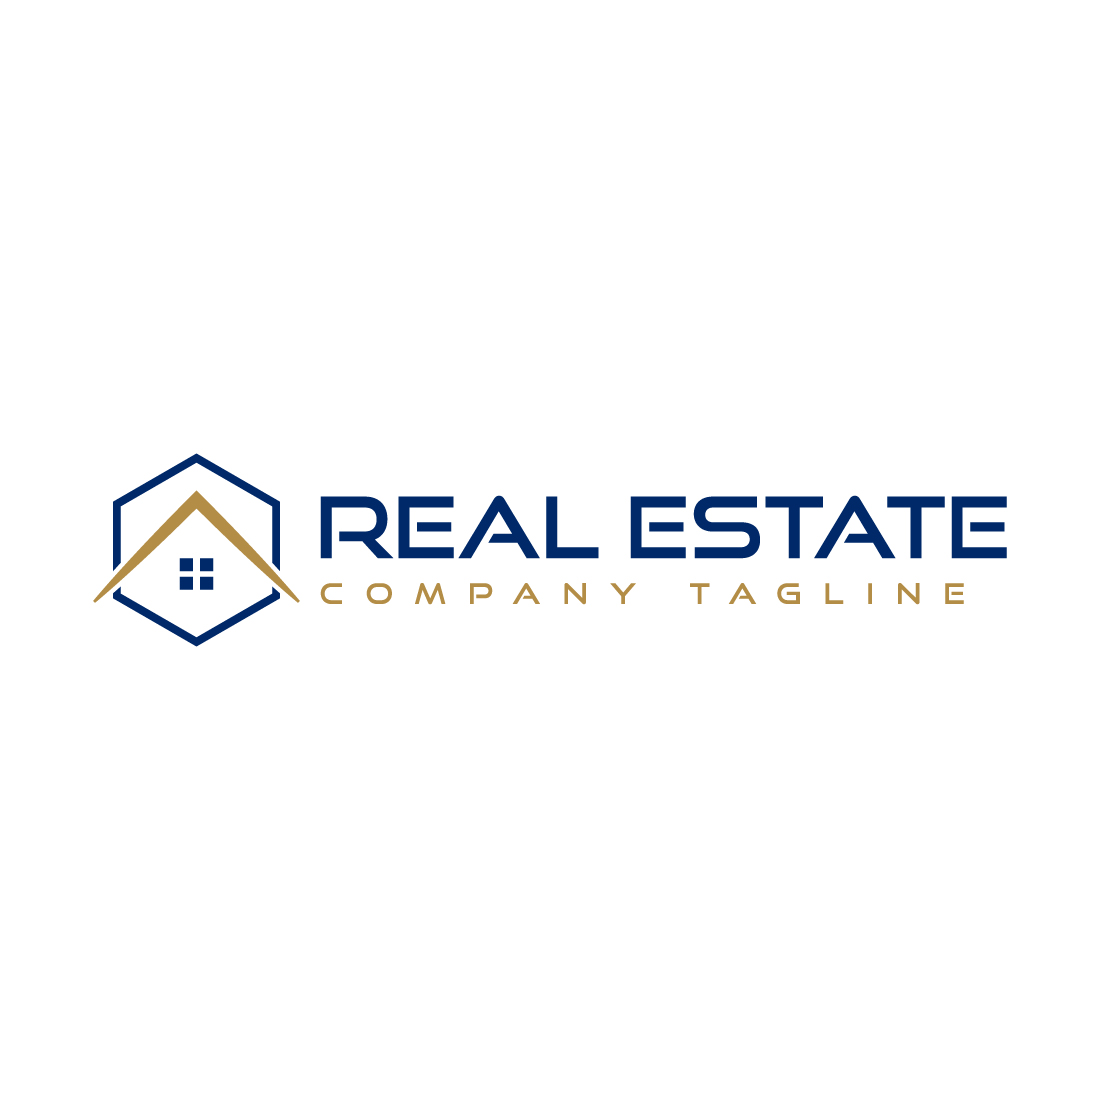 Real estate logo with golden, dark blue color cover image.